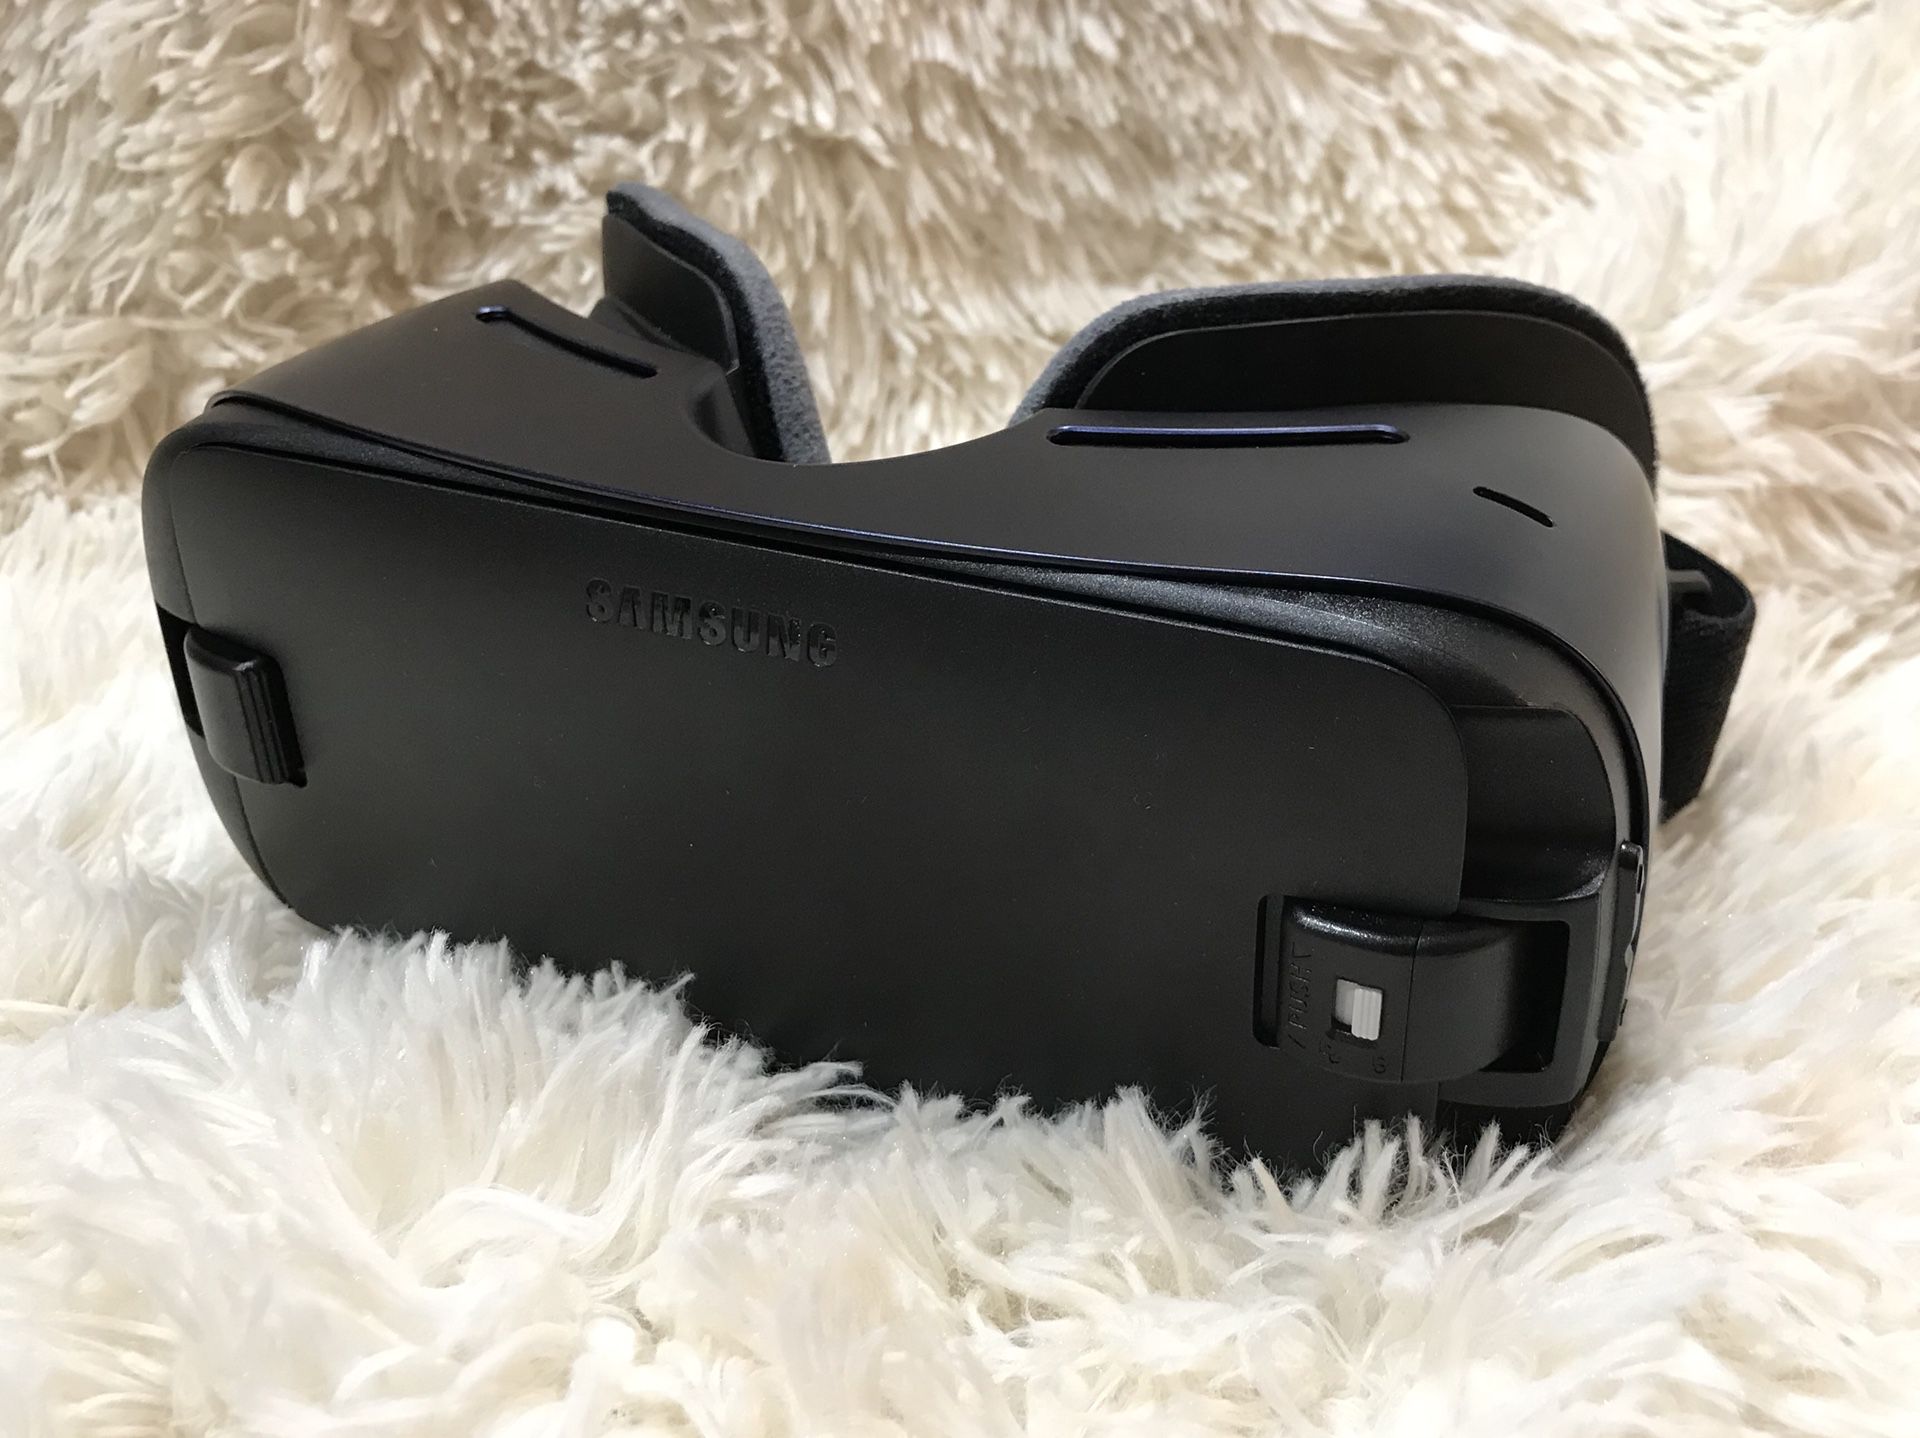 Samsung Oculus Gear VR Headset